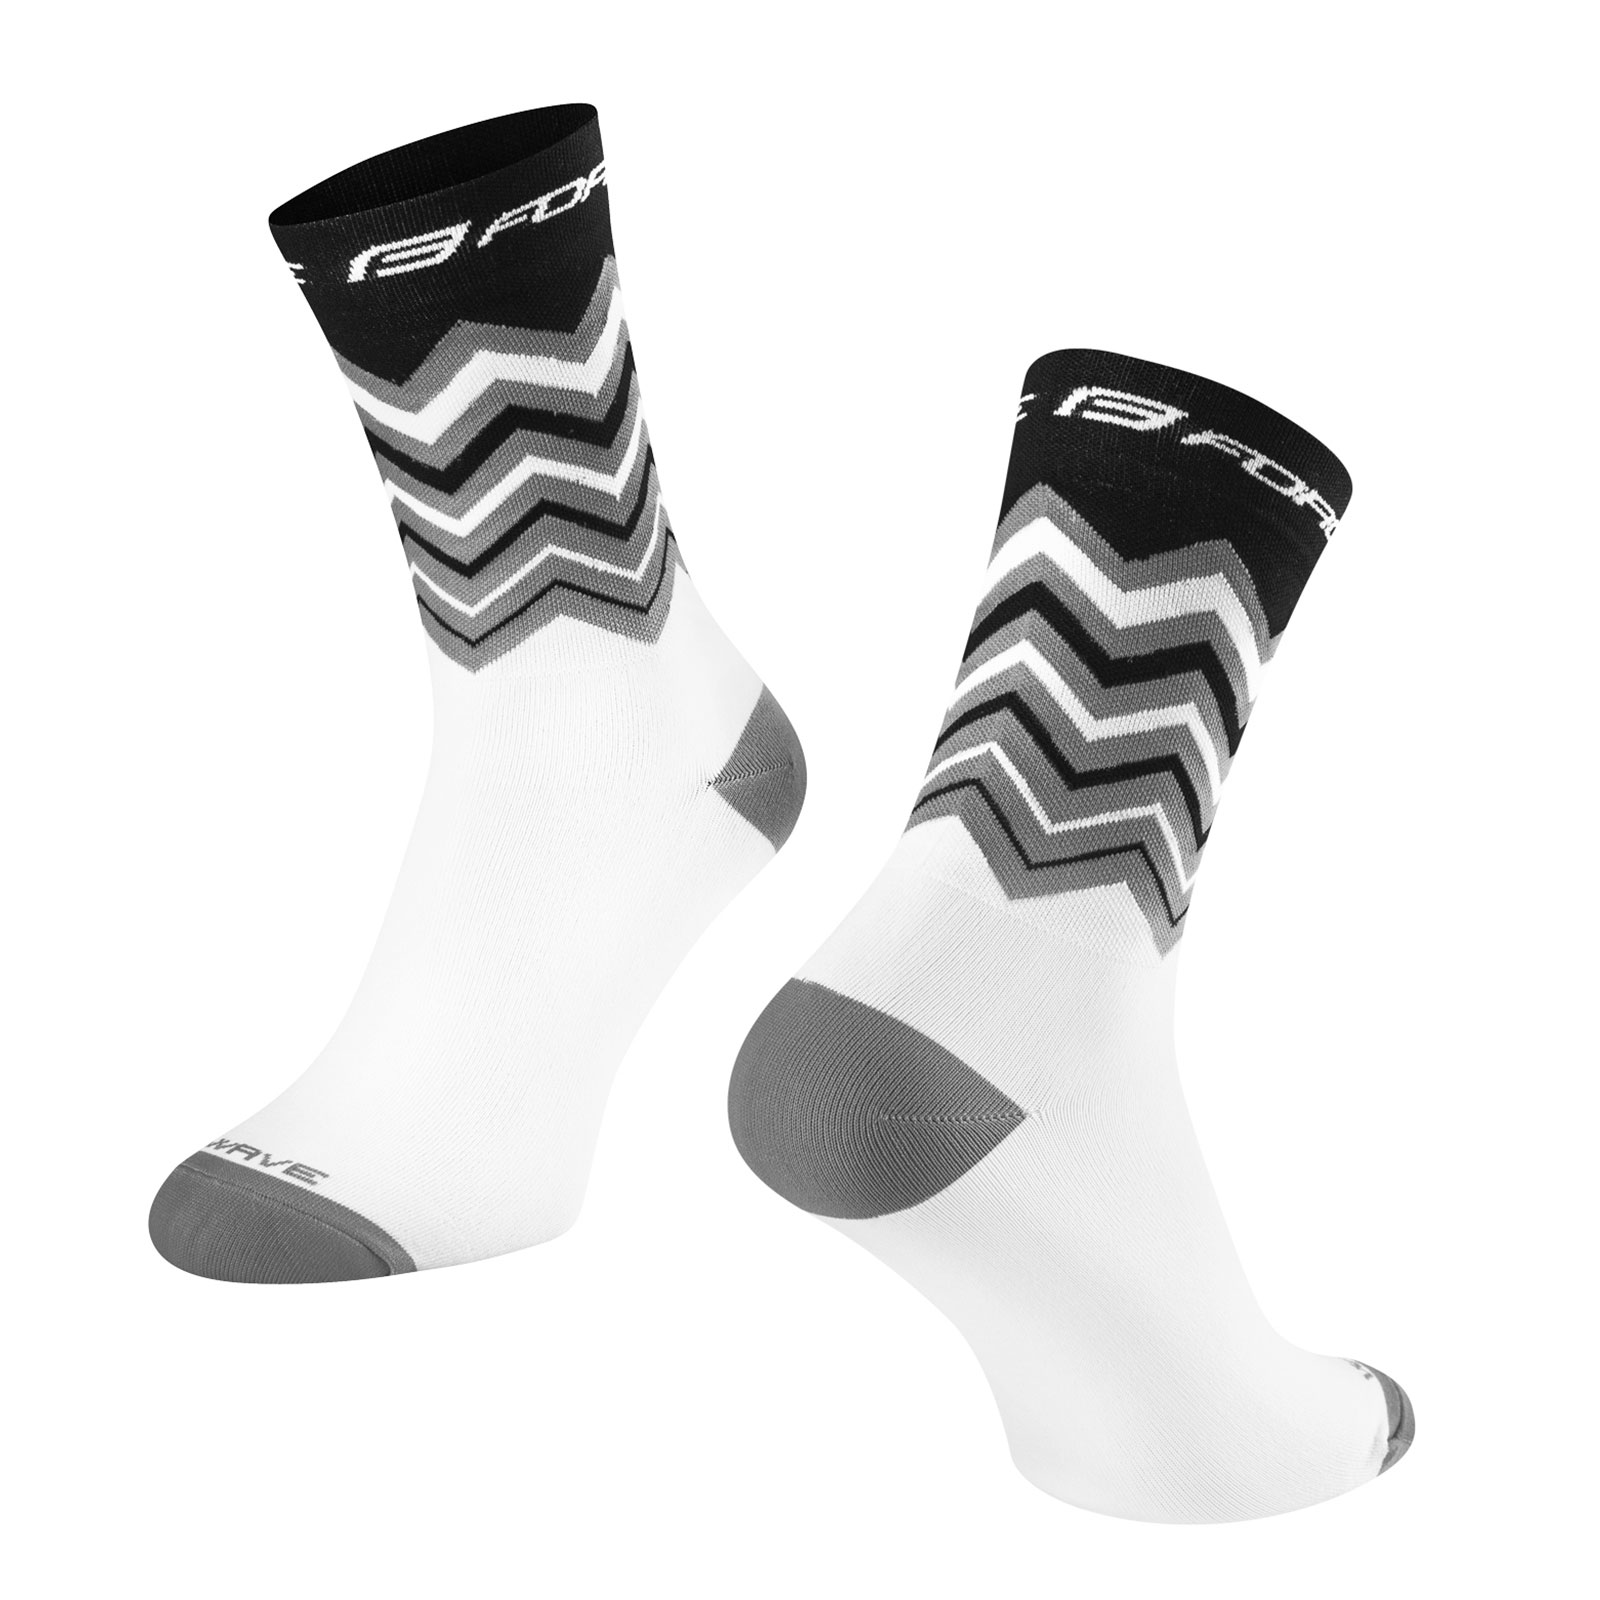 FORCE WAVE, black/white, socks